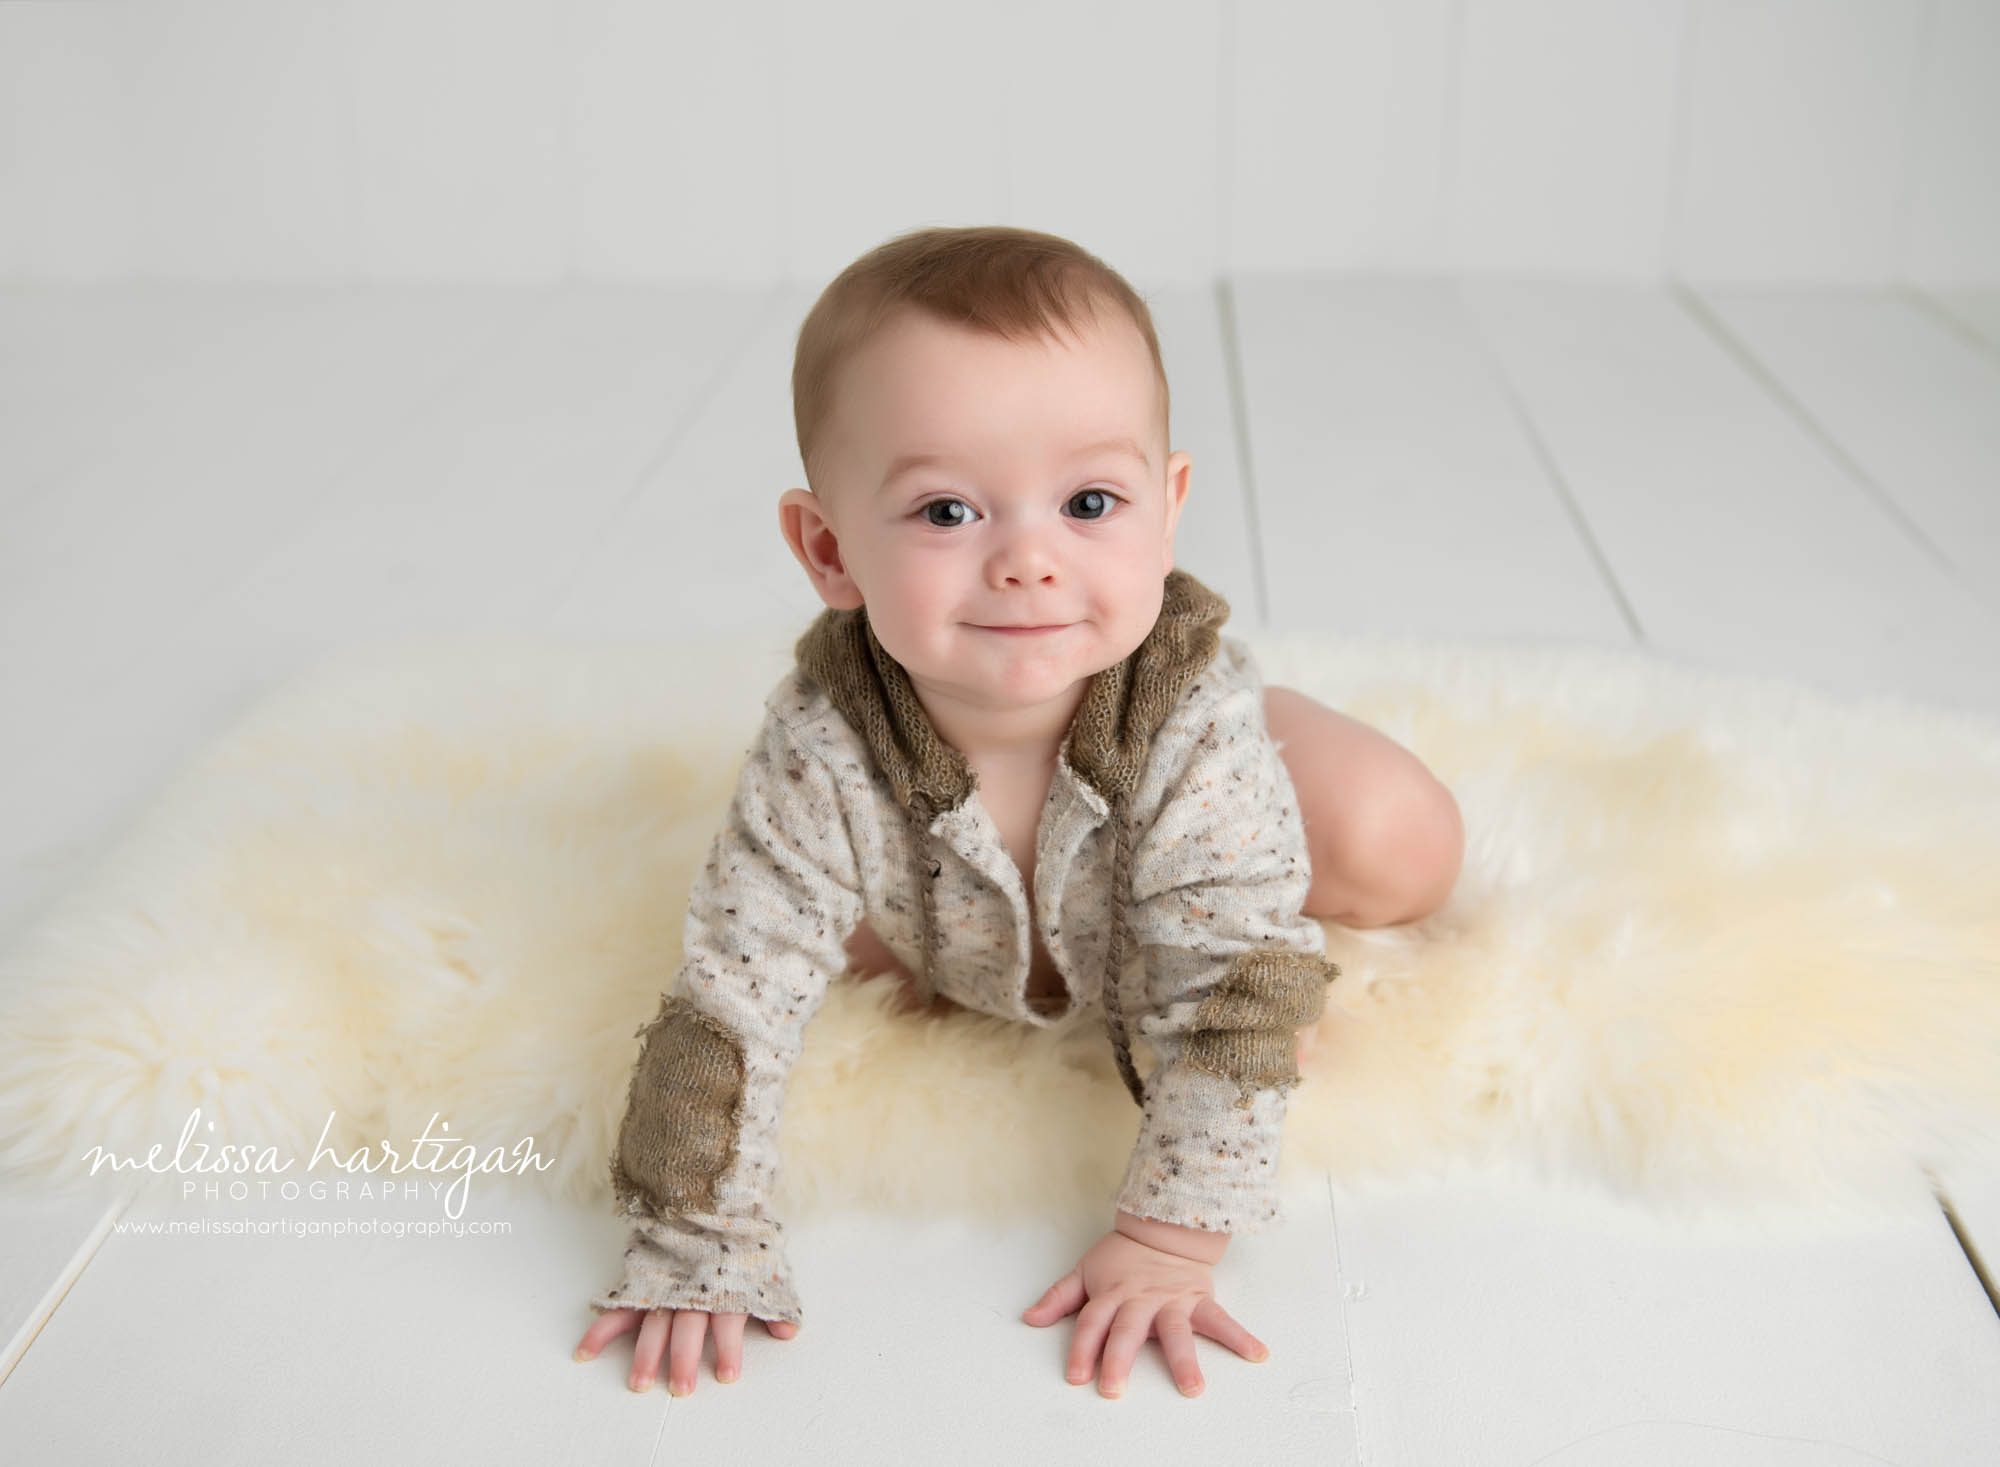 baby boy crawling on cream furry rug in studio photo session